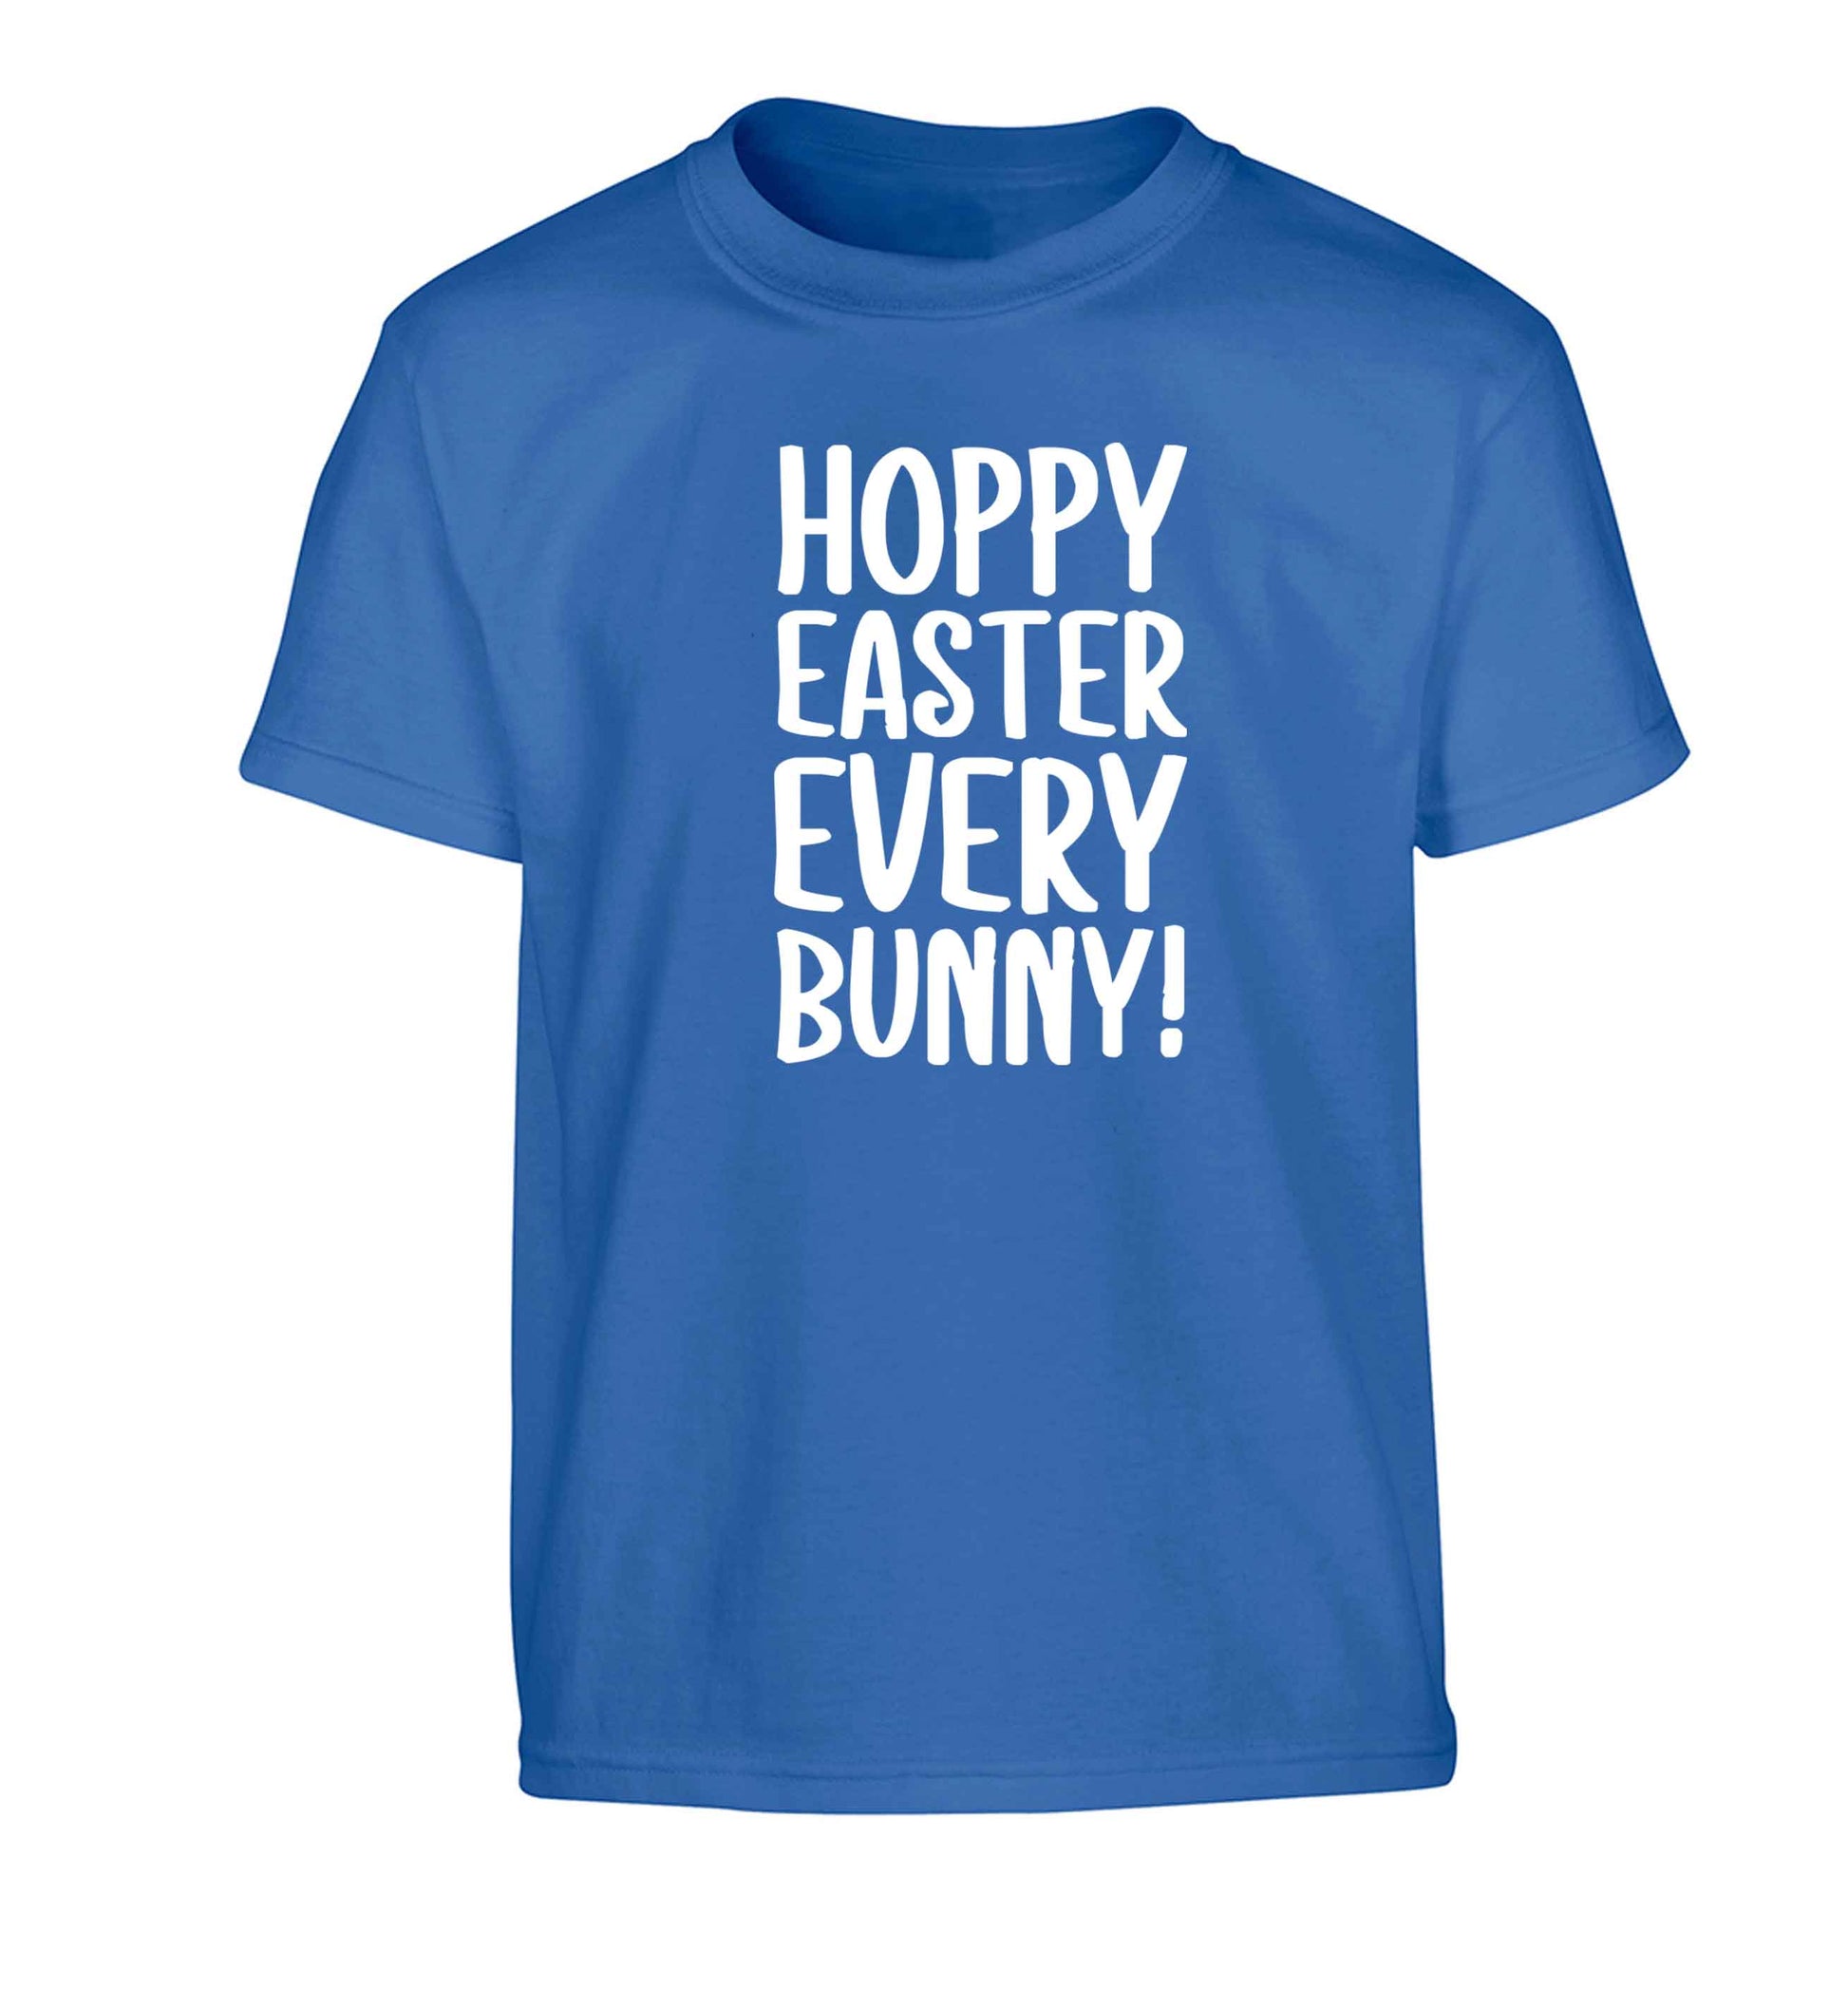 Hoppy Easter every bunny! Children's blue Tshirt 12-13 Years